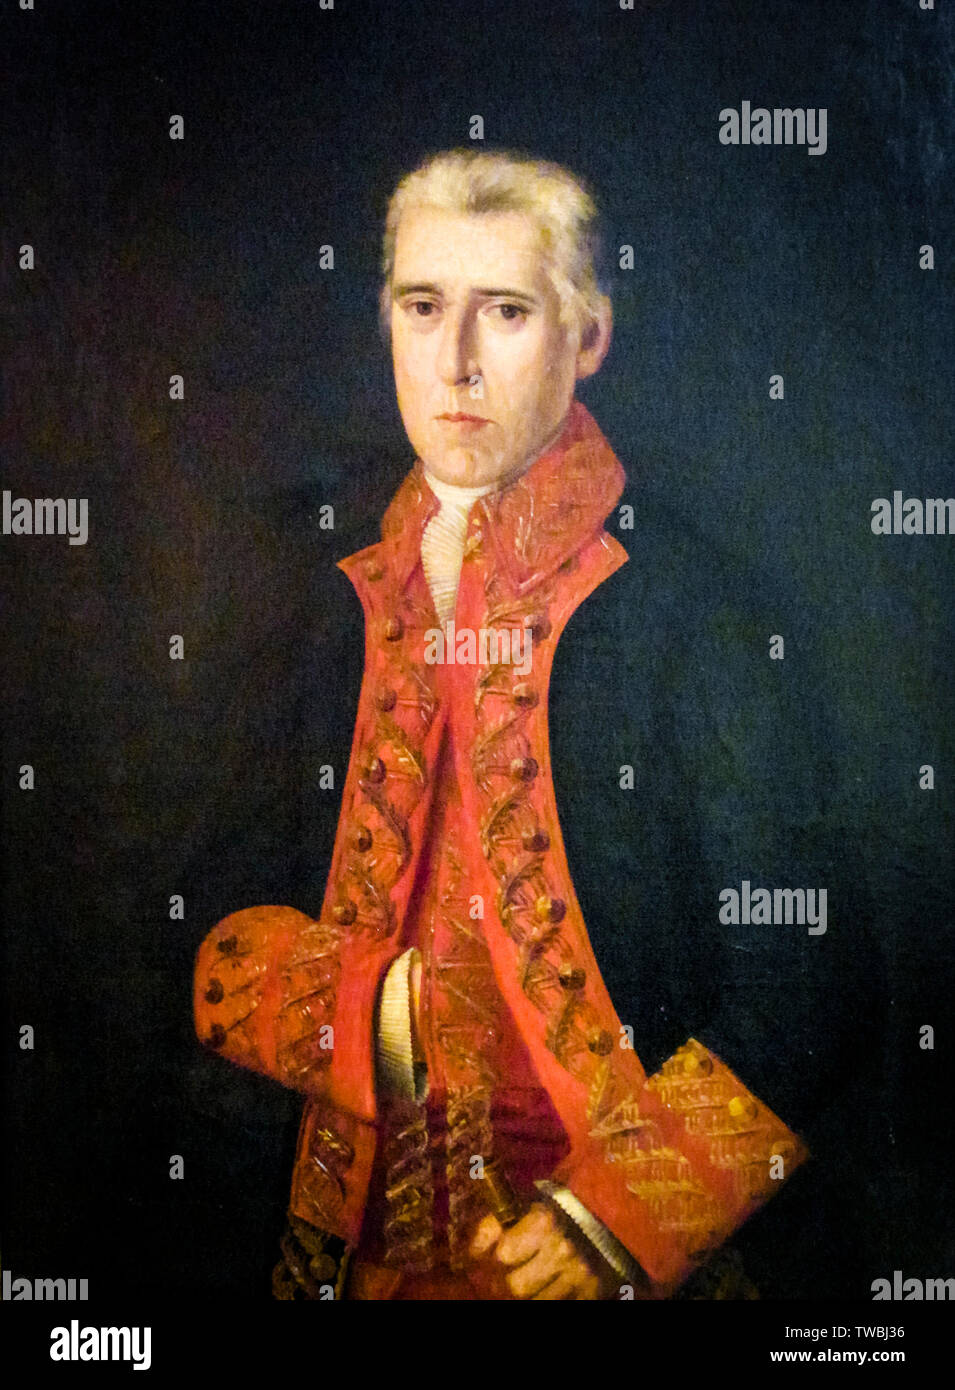 Antonio de Escaño, portrait painting, 1850 Stock Photo